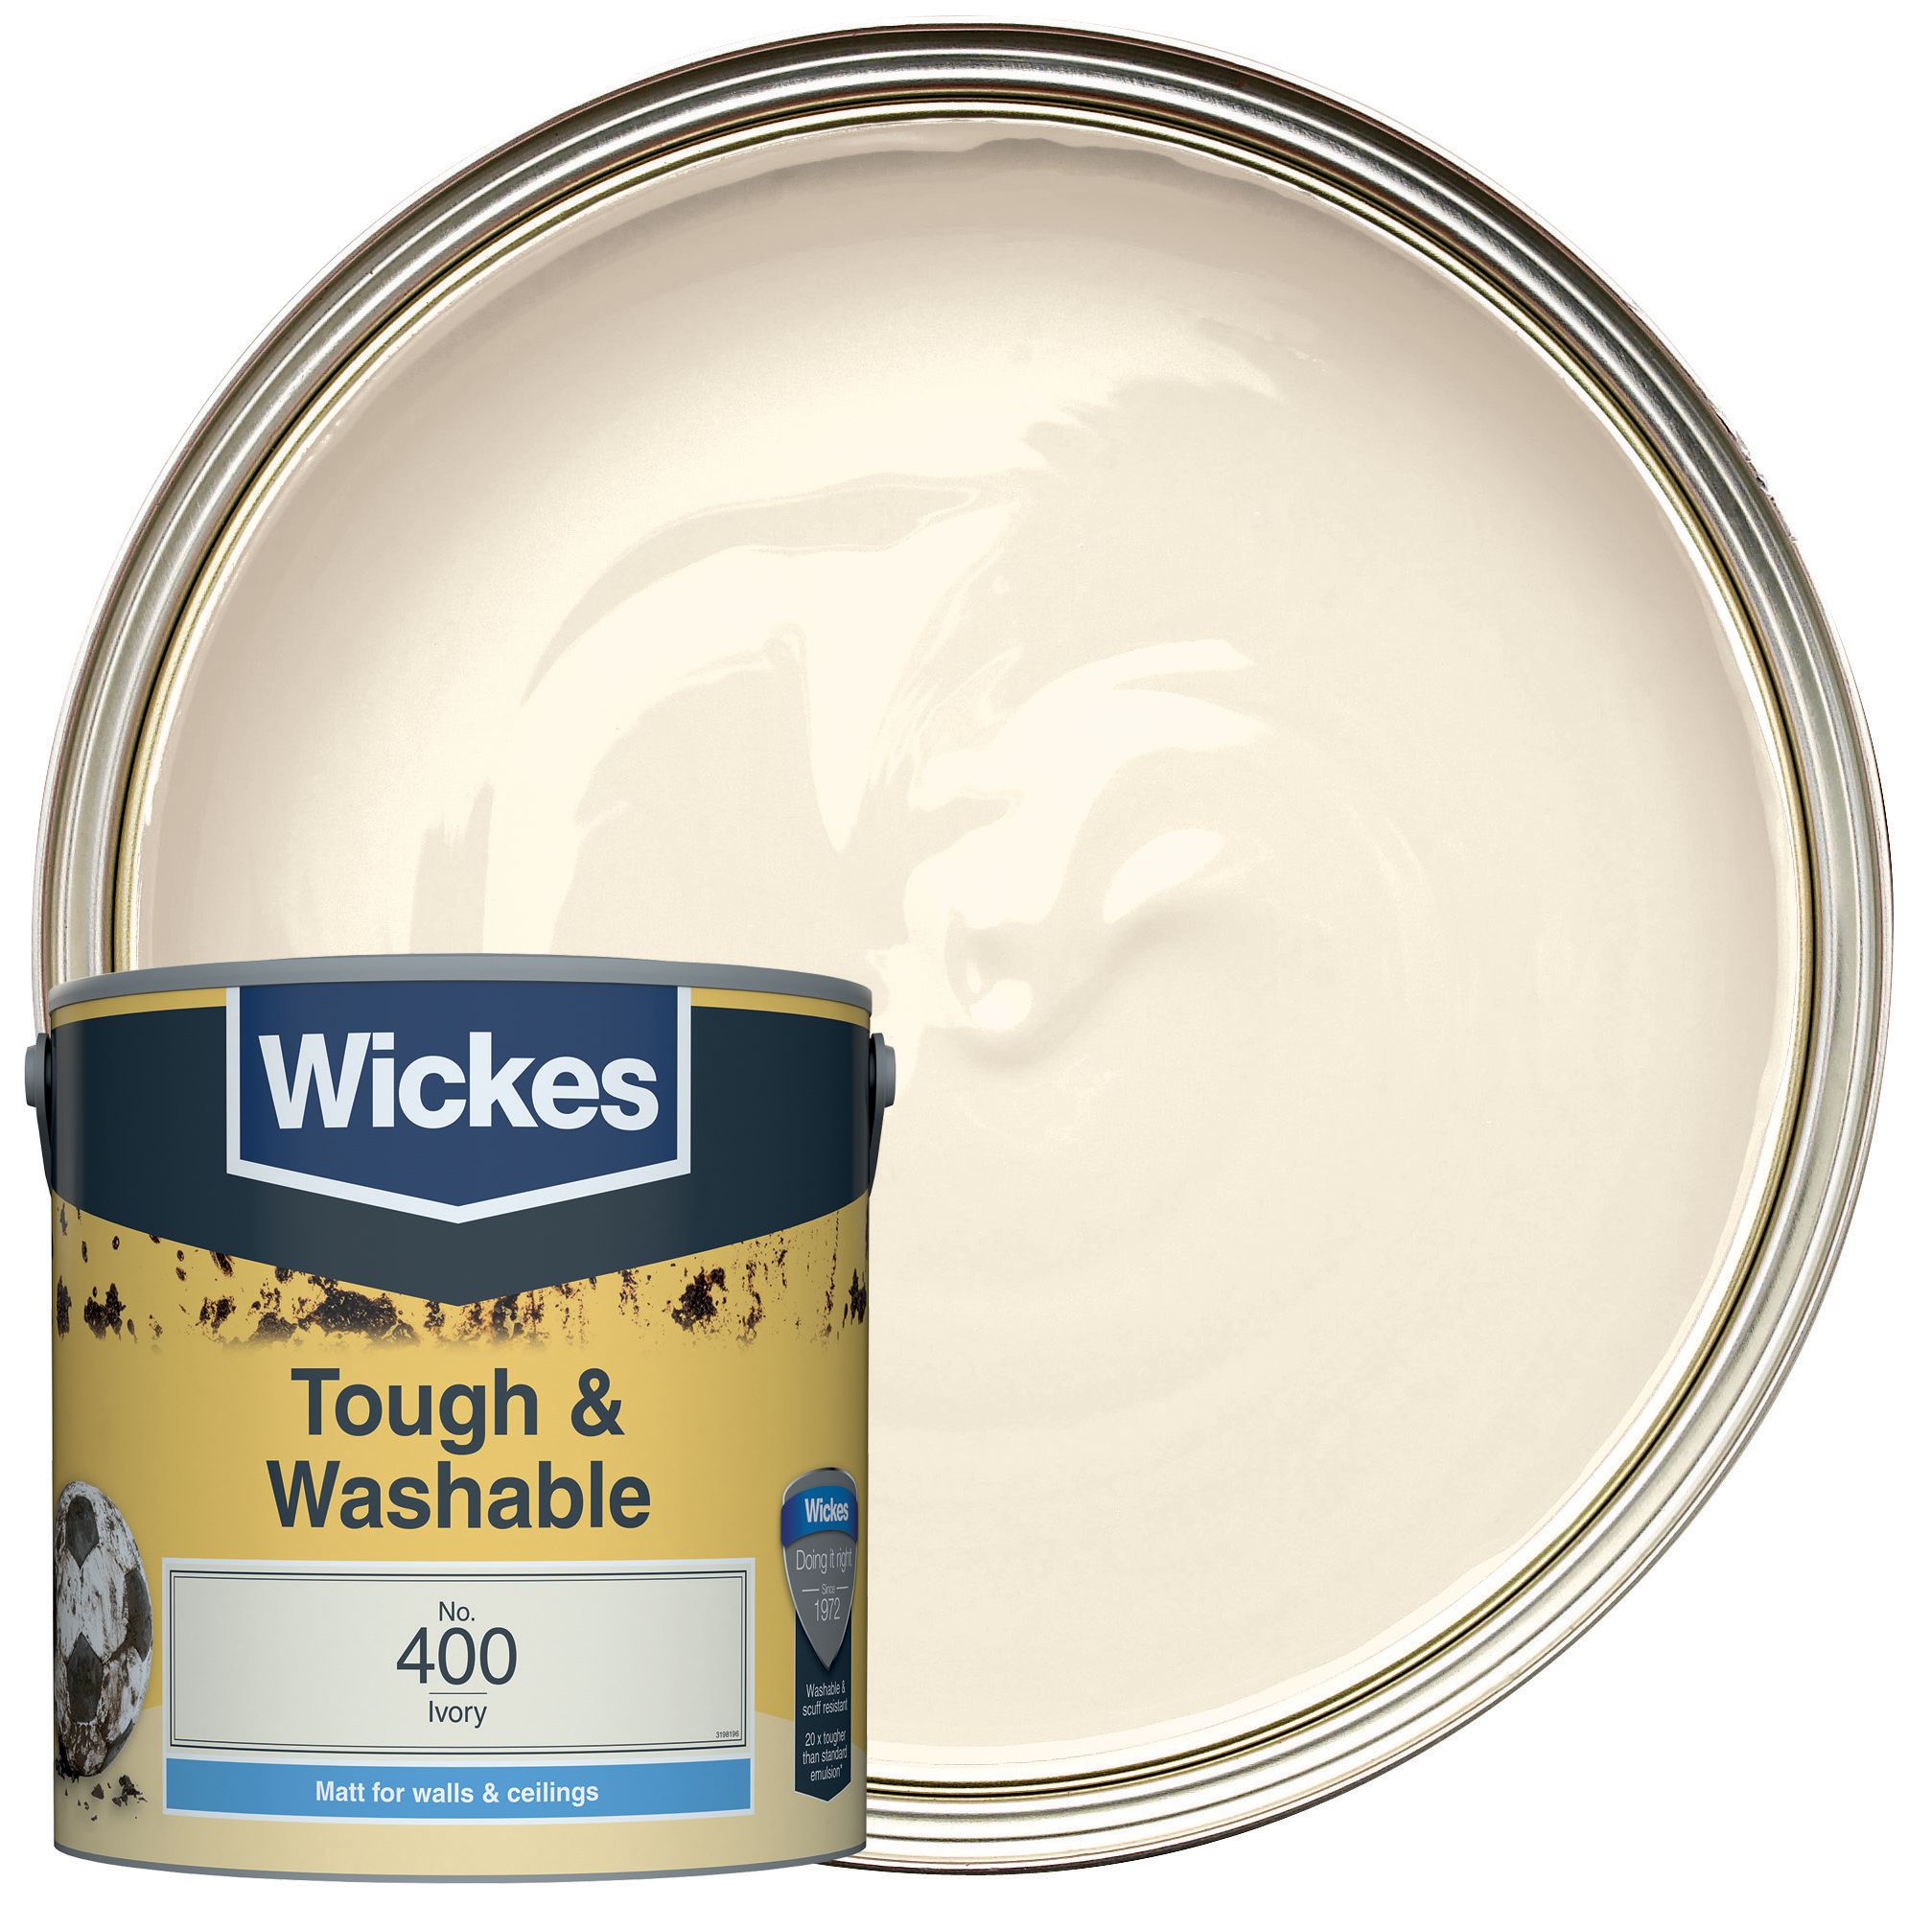 Wickes Tough & Washable Matt Emulsion Paint - Ivory No.400 - 2.5L